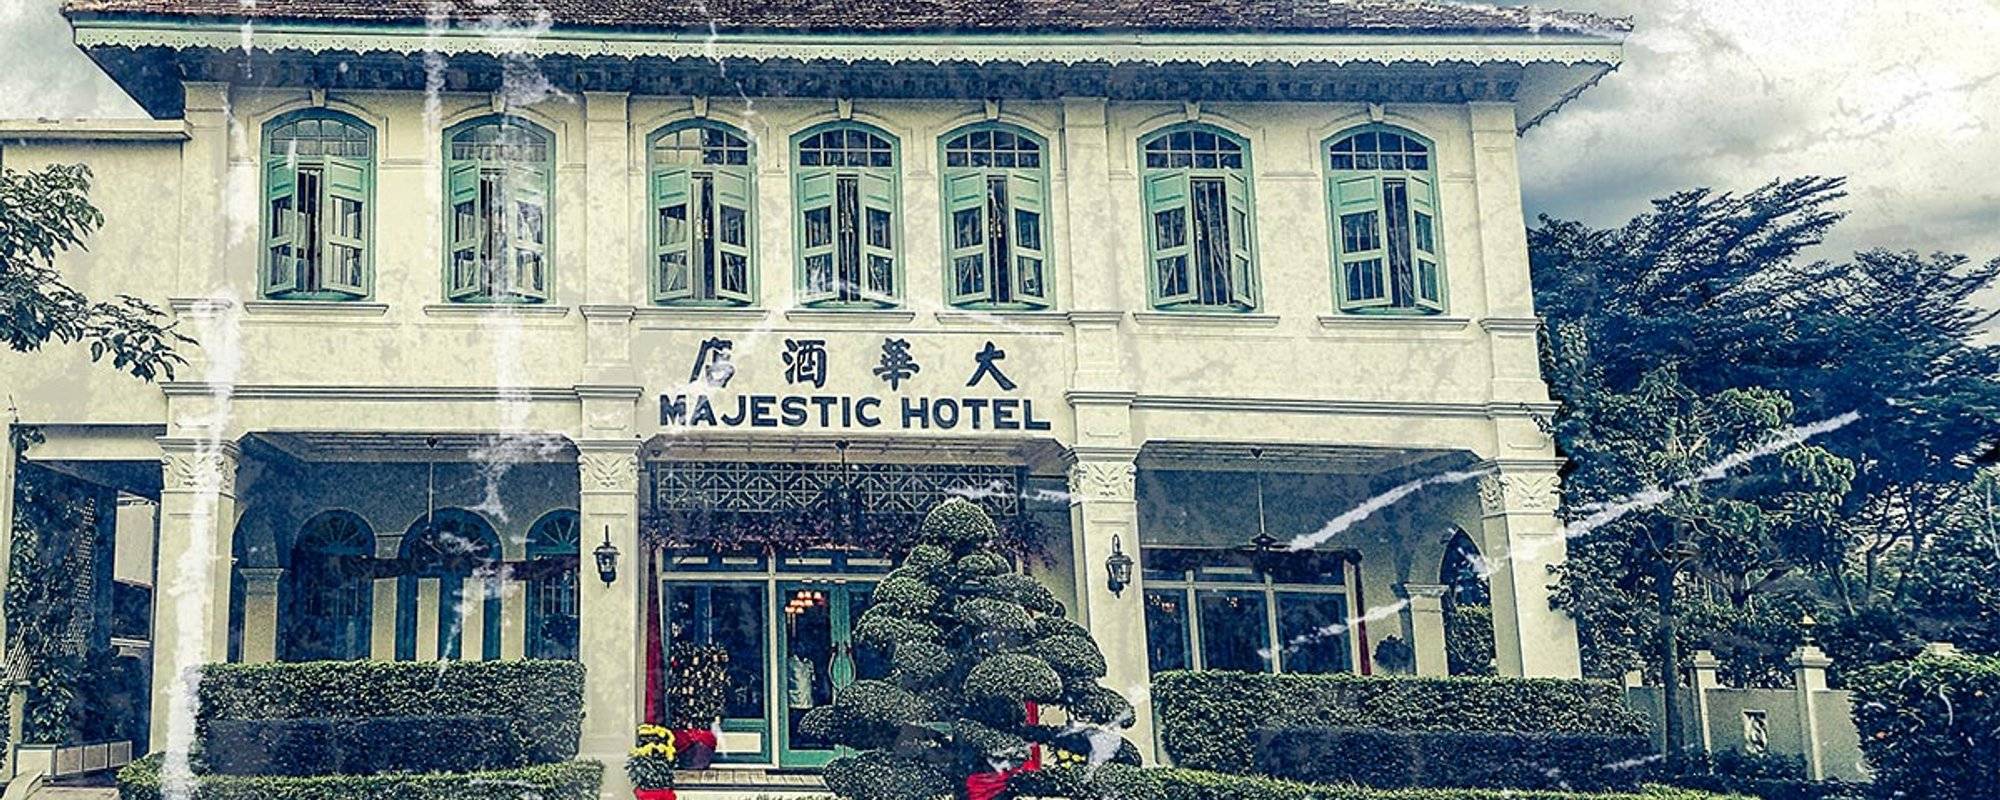 THE MAJESTIC MALACCA HOTEL - HISTORY